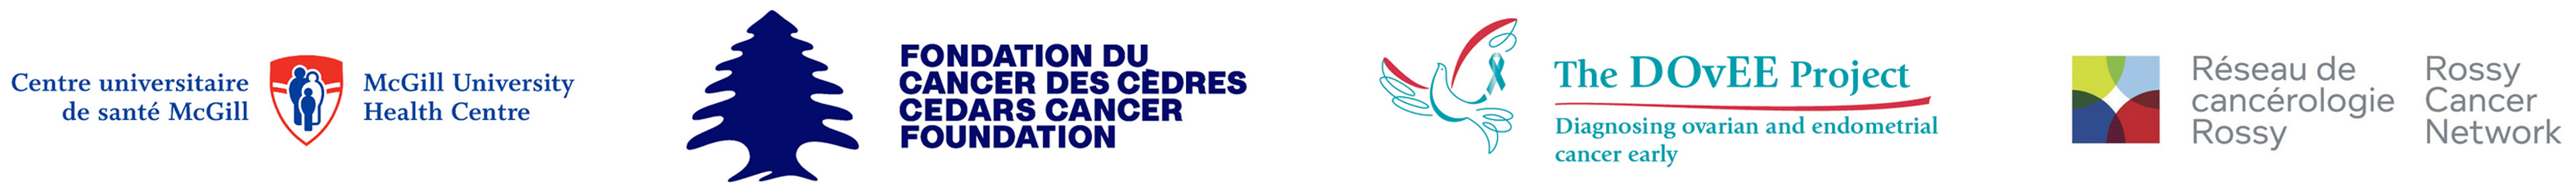 Footer logos